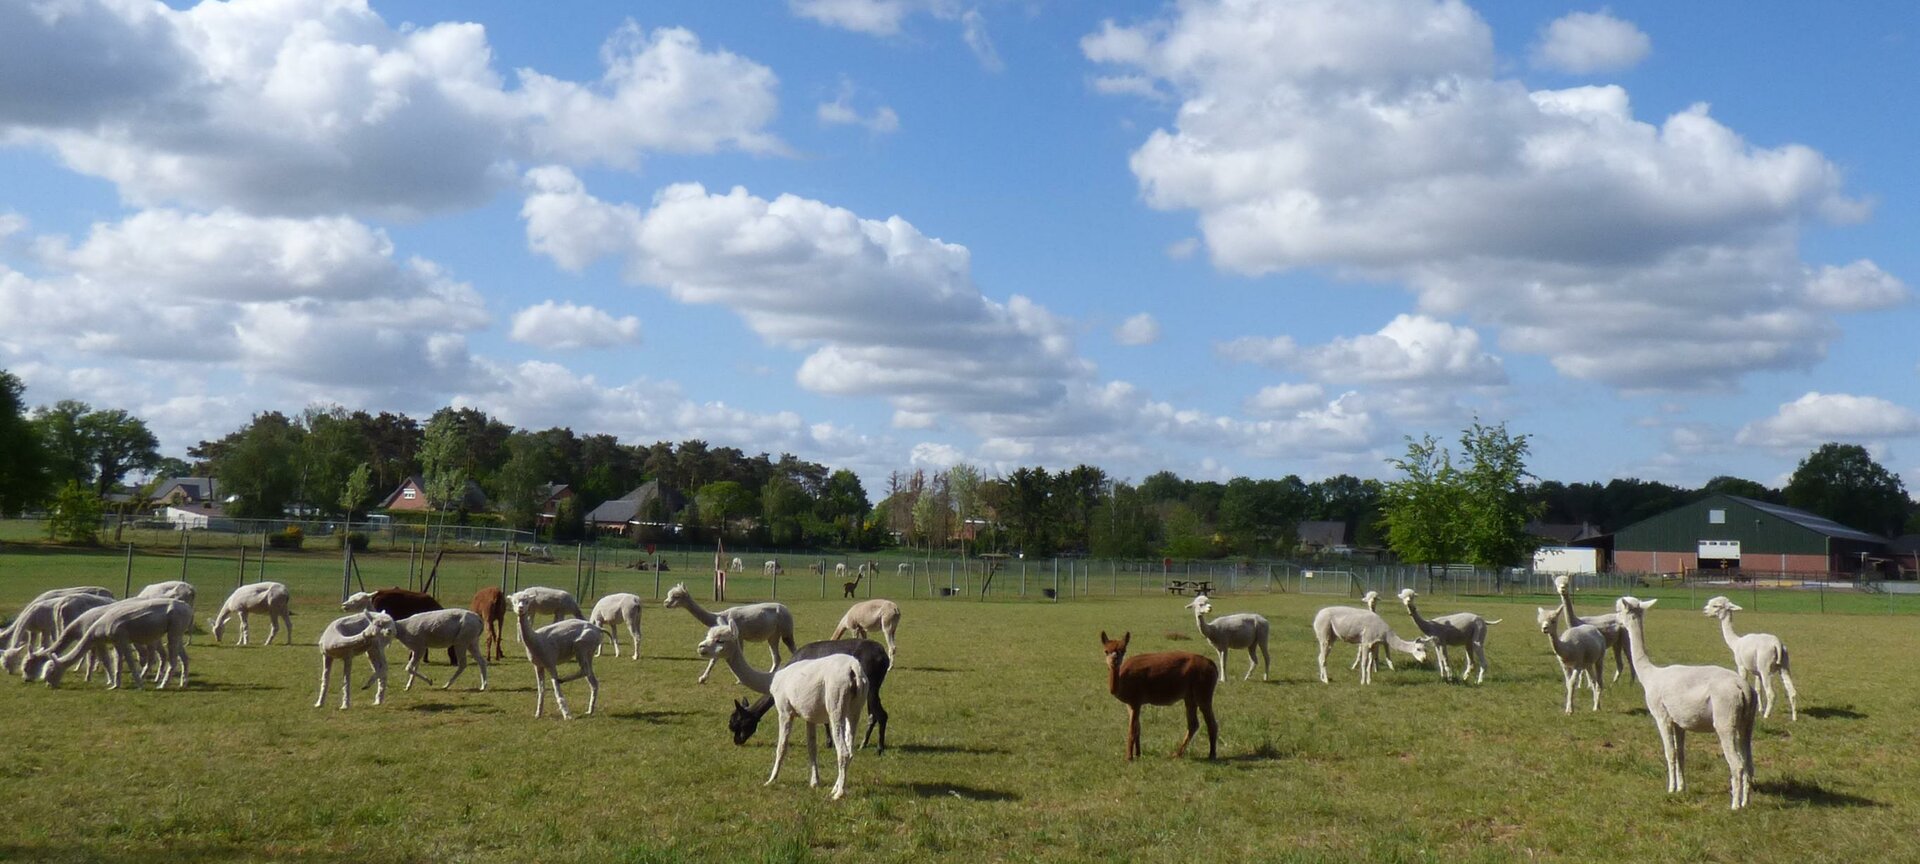 De Alpacaboerderij Bocholt - Weide